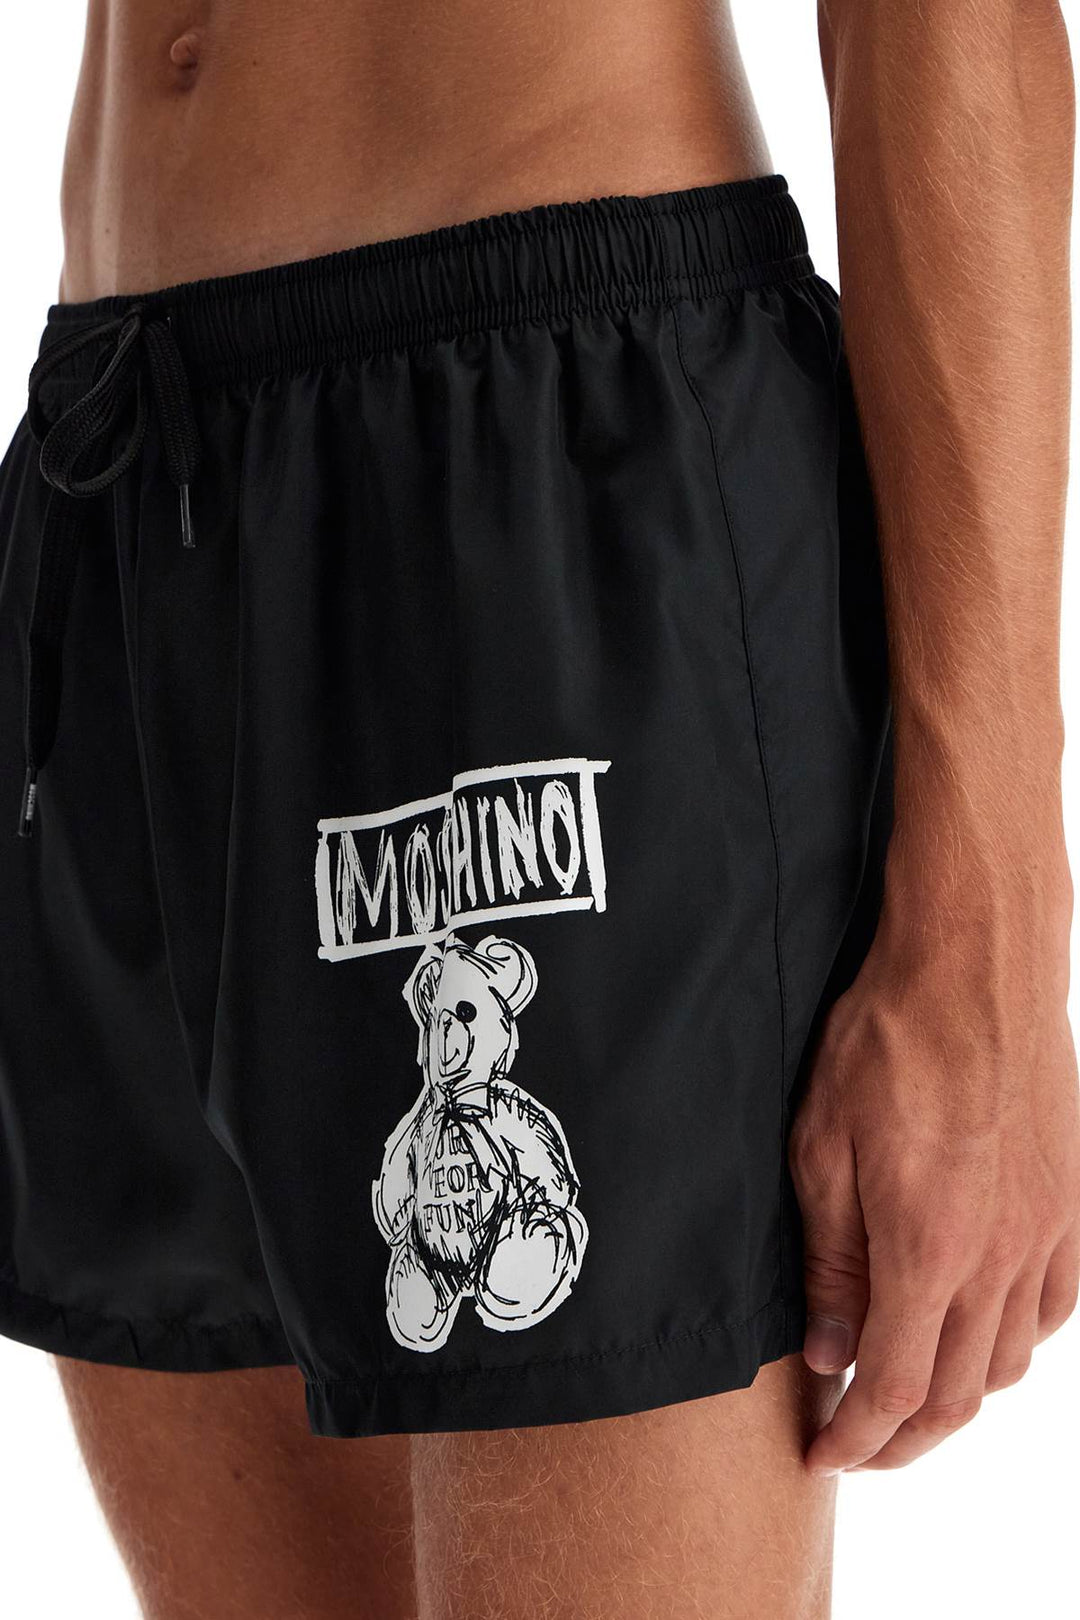 Moschino Sea Print Boxer Shorts For   Black